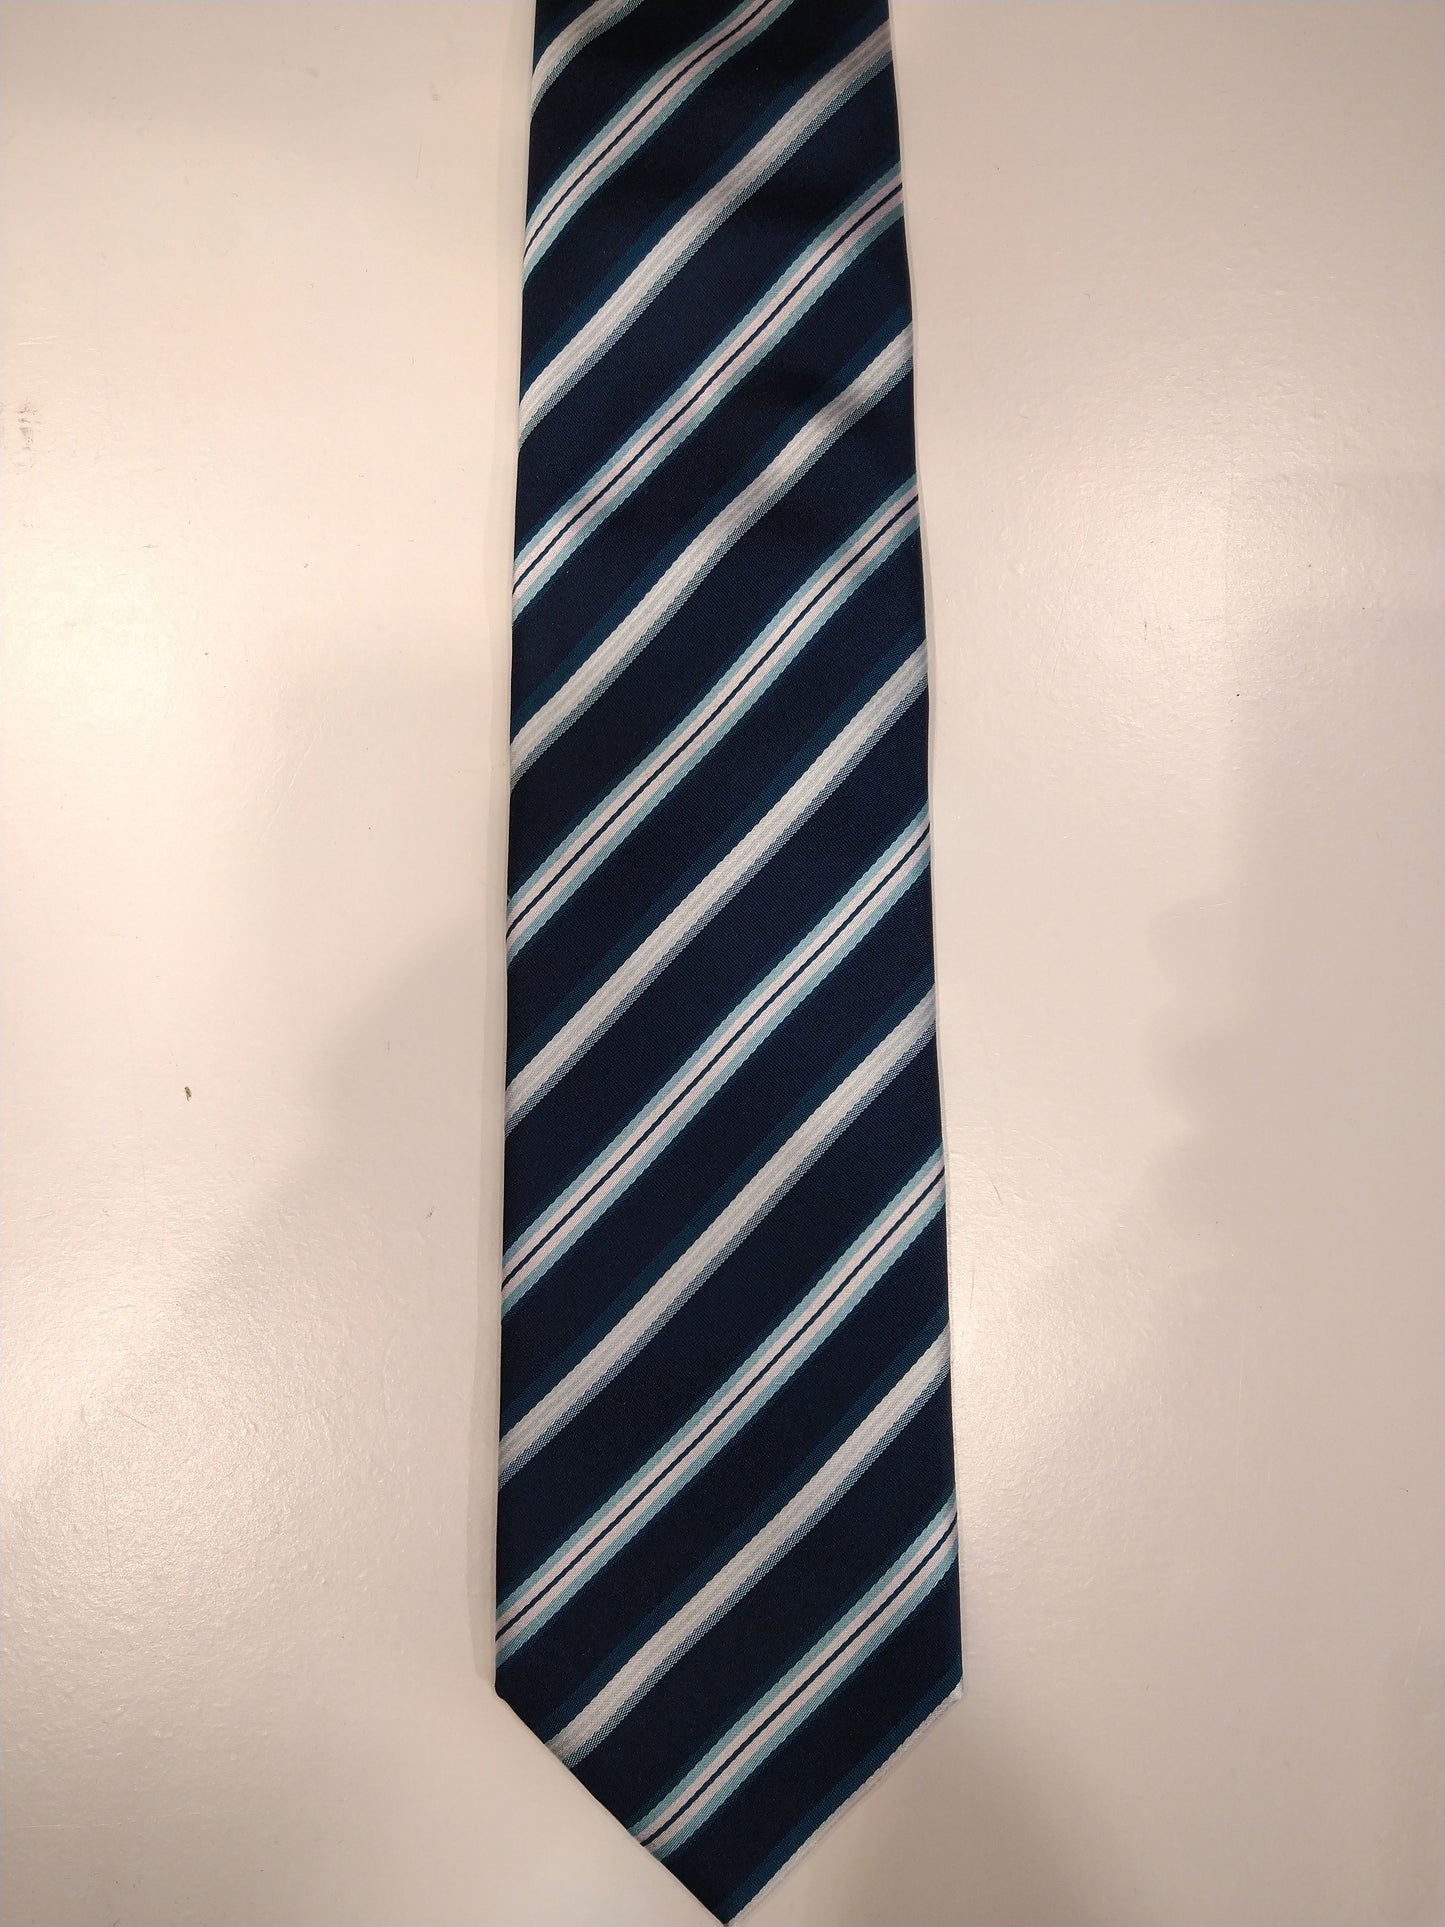 Jean Chatel Paris silk tie. Blue white striped.